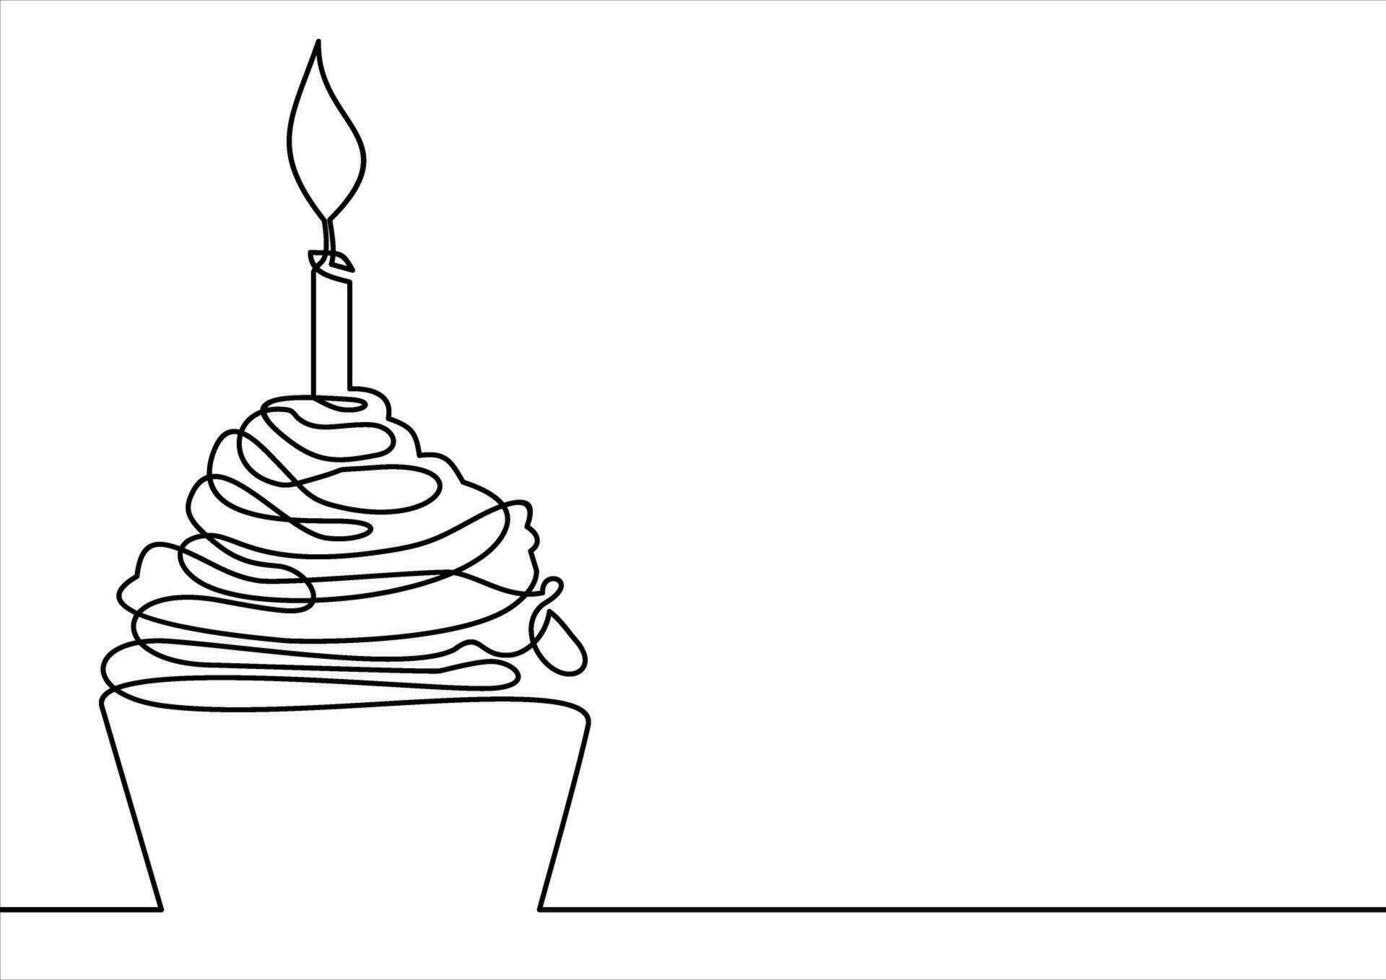 cupcake-kontinuerlig linje teckning vektor